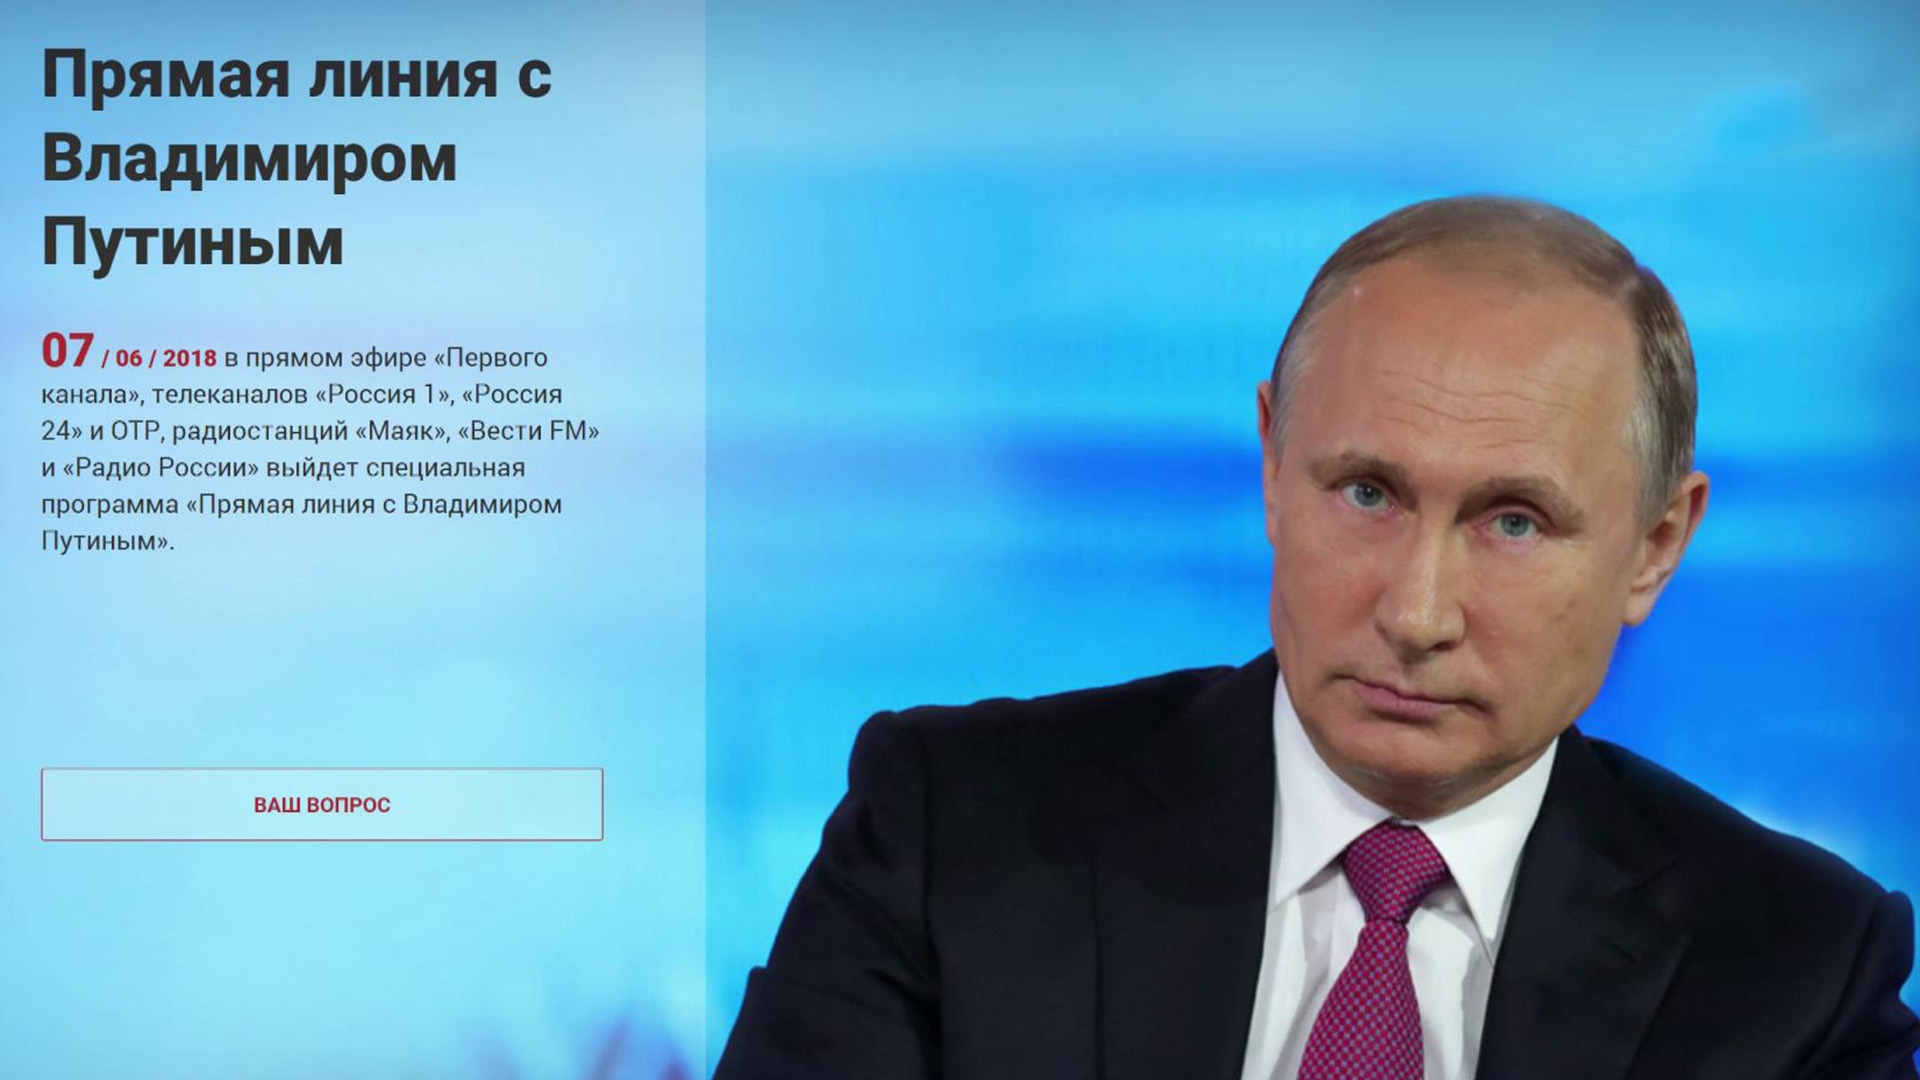 Сайт президента рф горячая линия. Прямая линия с Путиным. Прямая линия с президентом. Номер Путина. Прямая линия 2018.